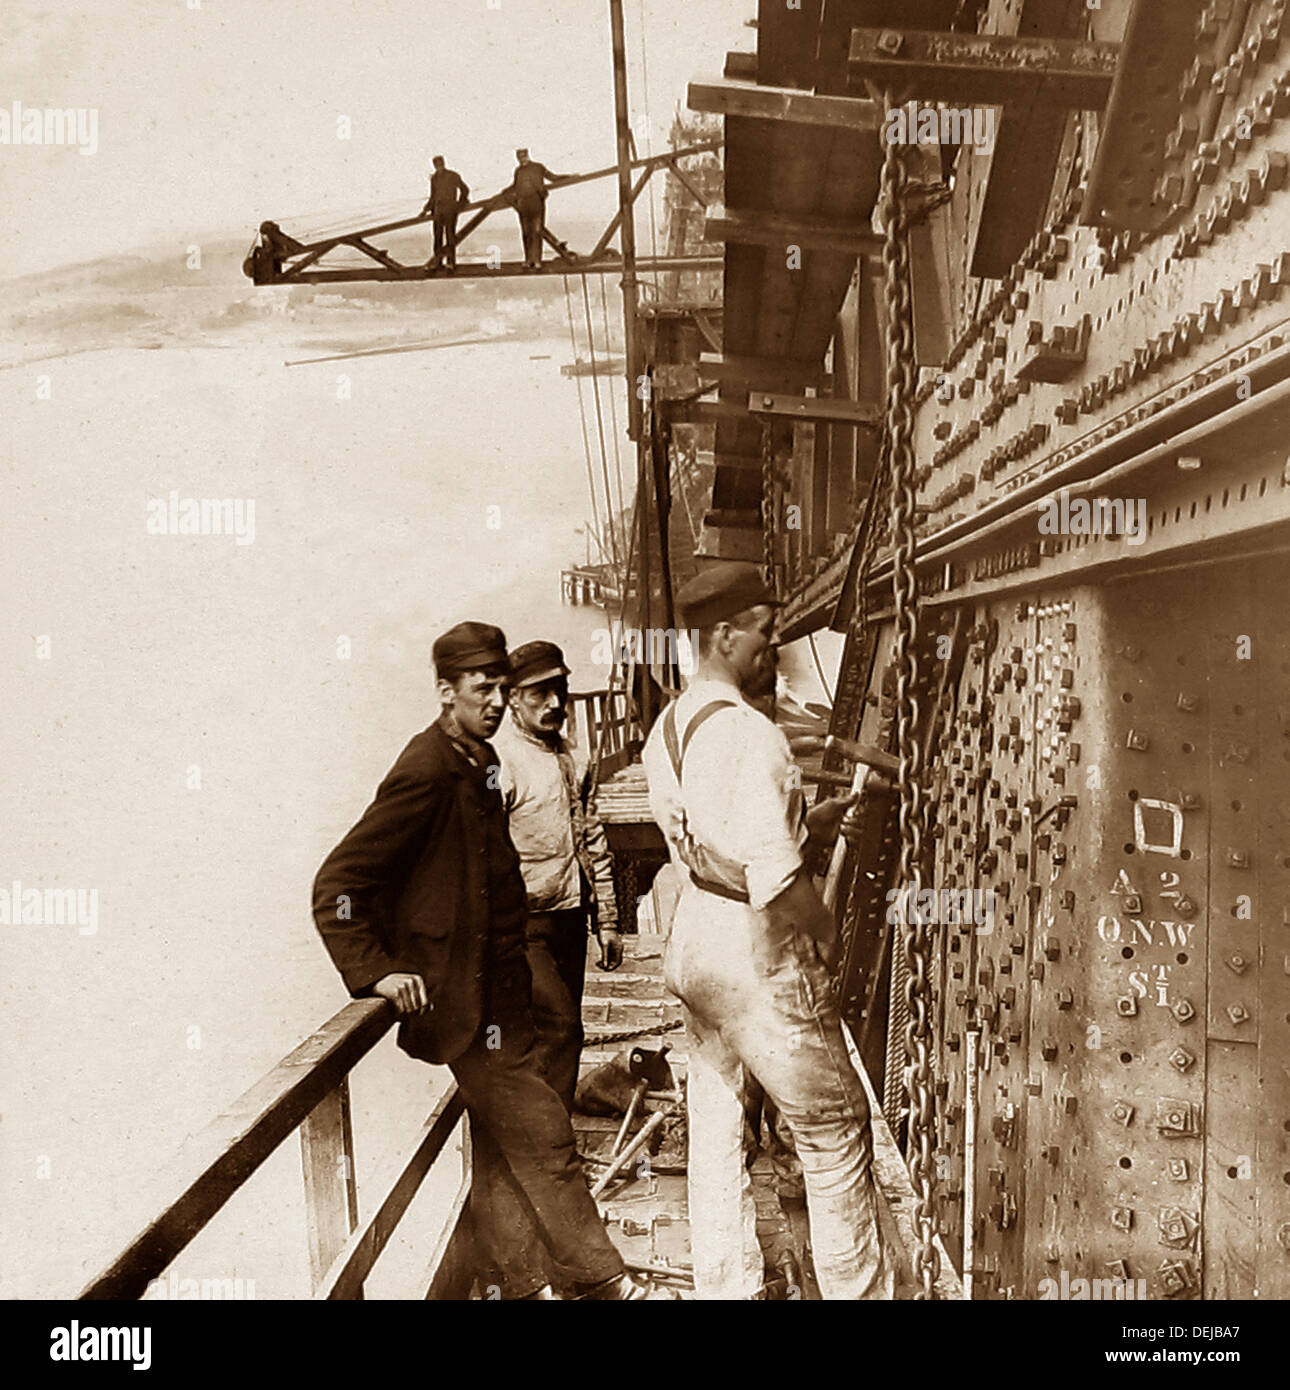 Building the Forth Railway Bridge Victorian period Stock Photo